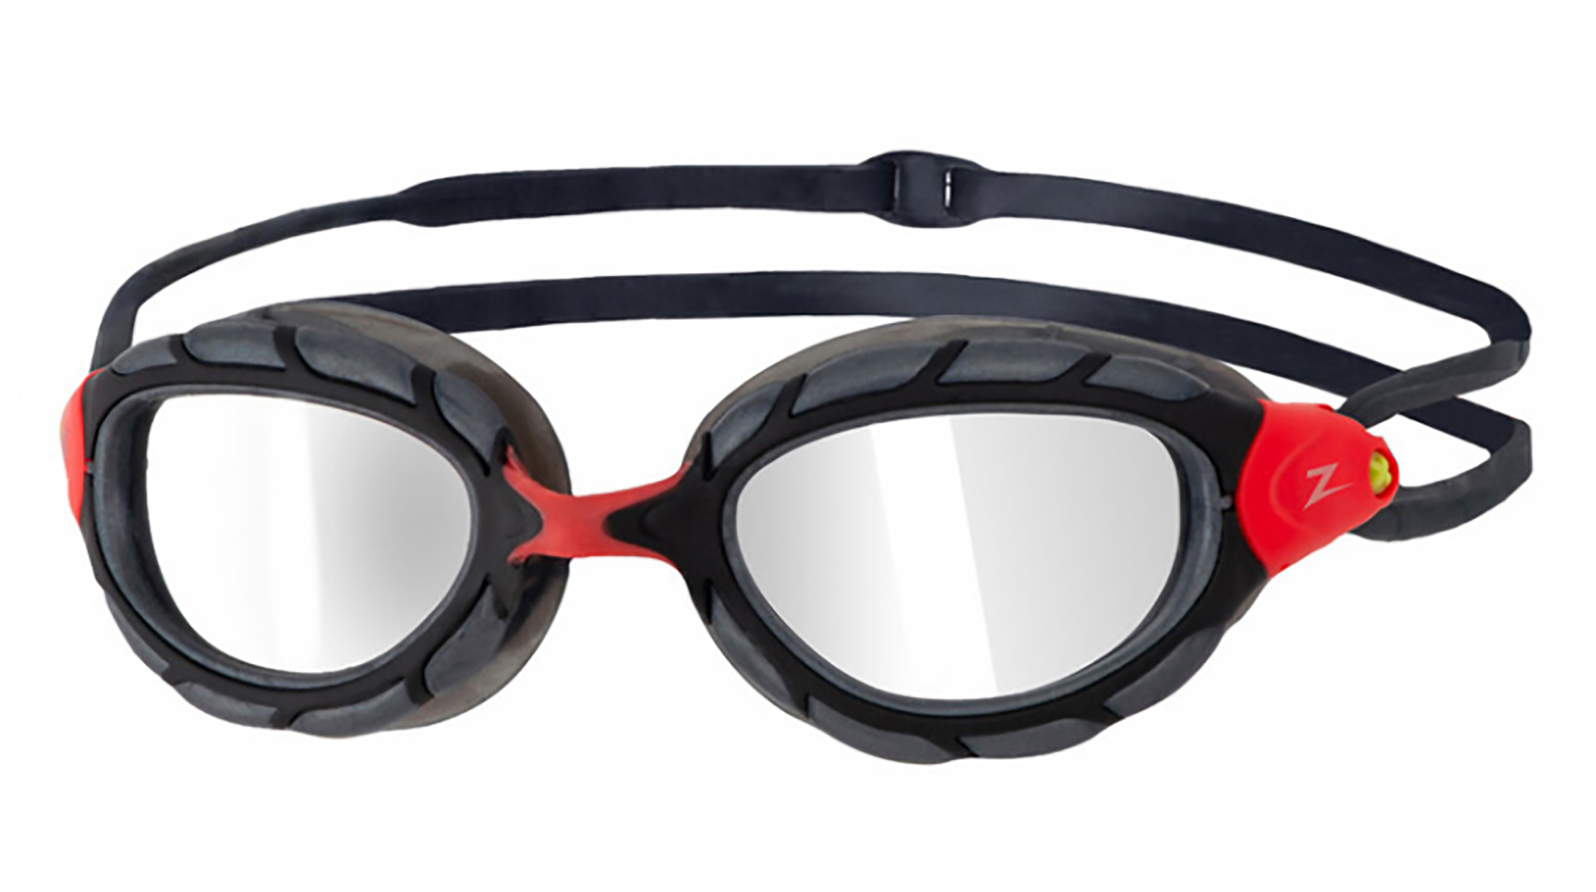 Очки для плавания ZOGGS Predator Titanium очки для плавания zoggs predator flex polarized ultra copper red